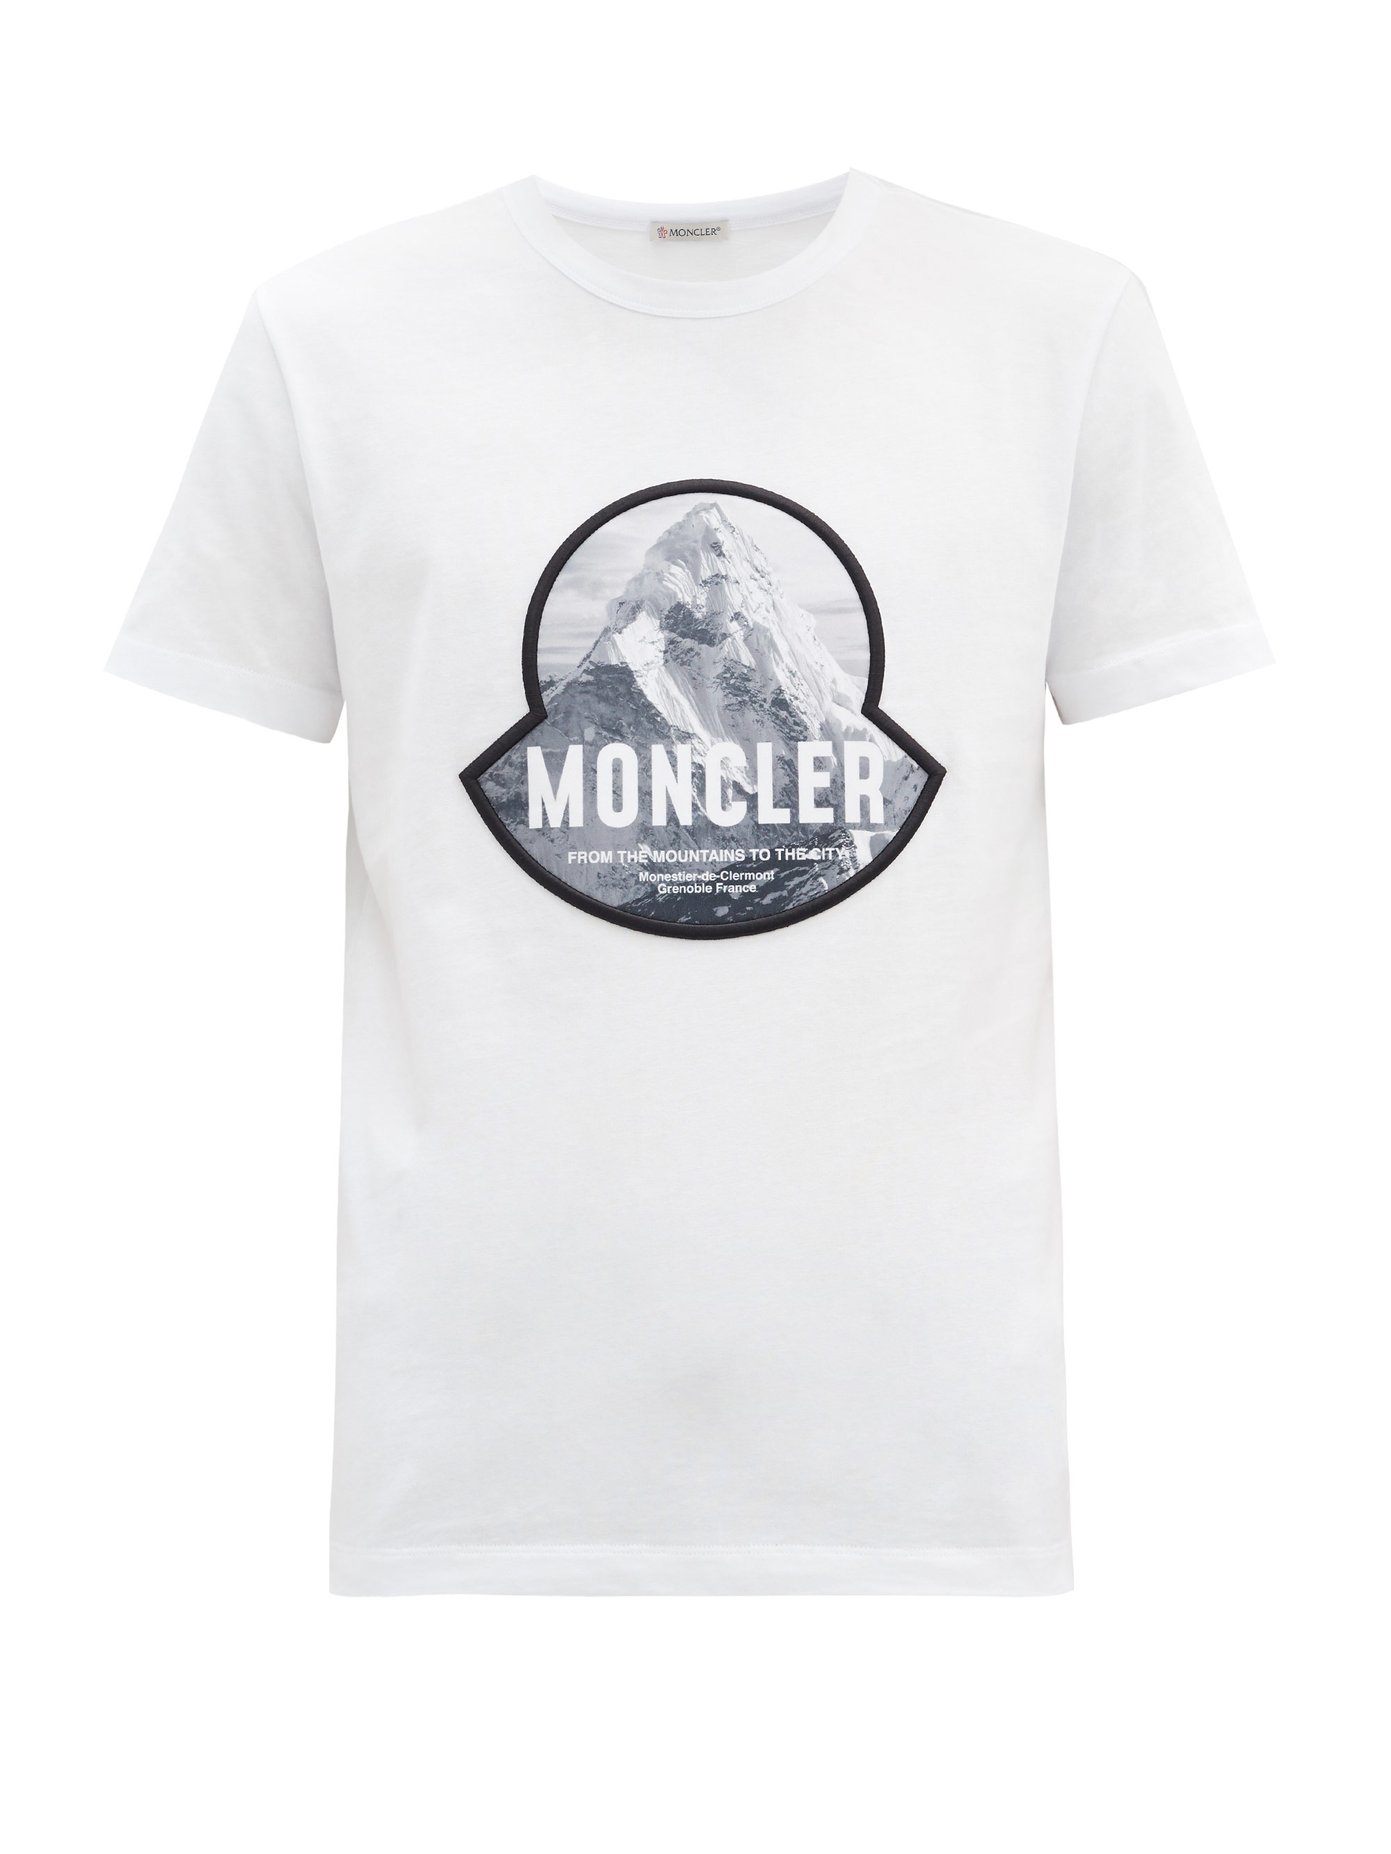 moncler mountain t shirt